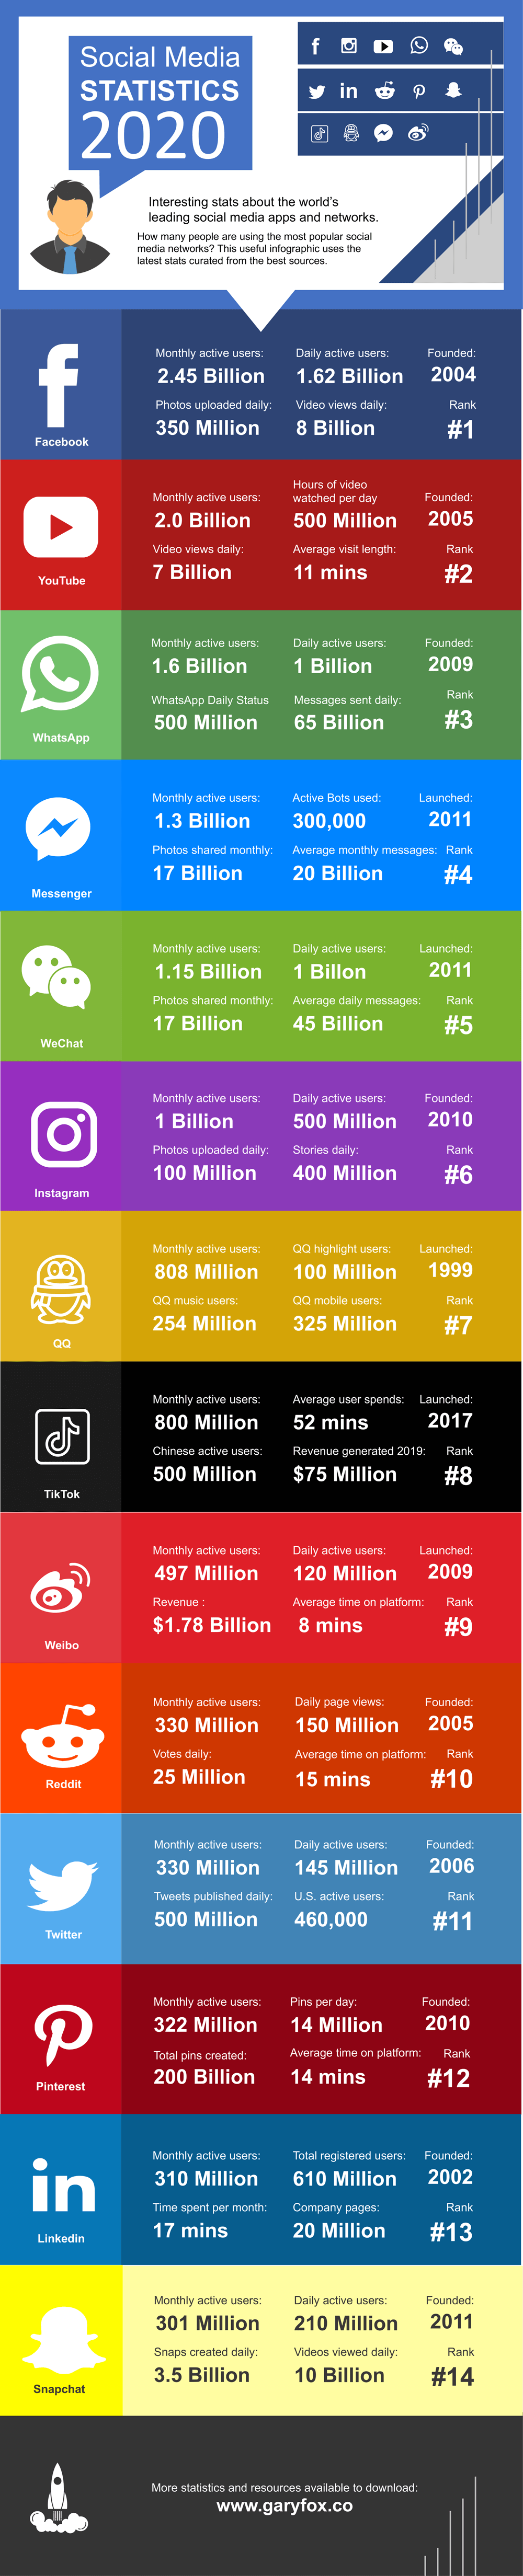 Social Media Statistics 2020 Infographic